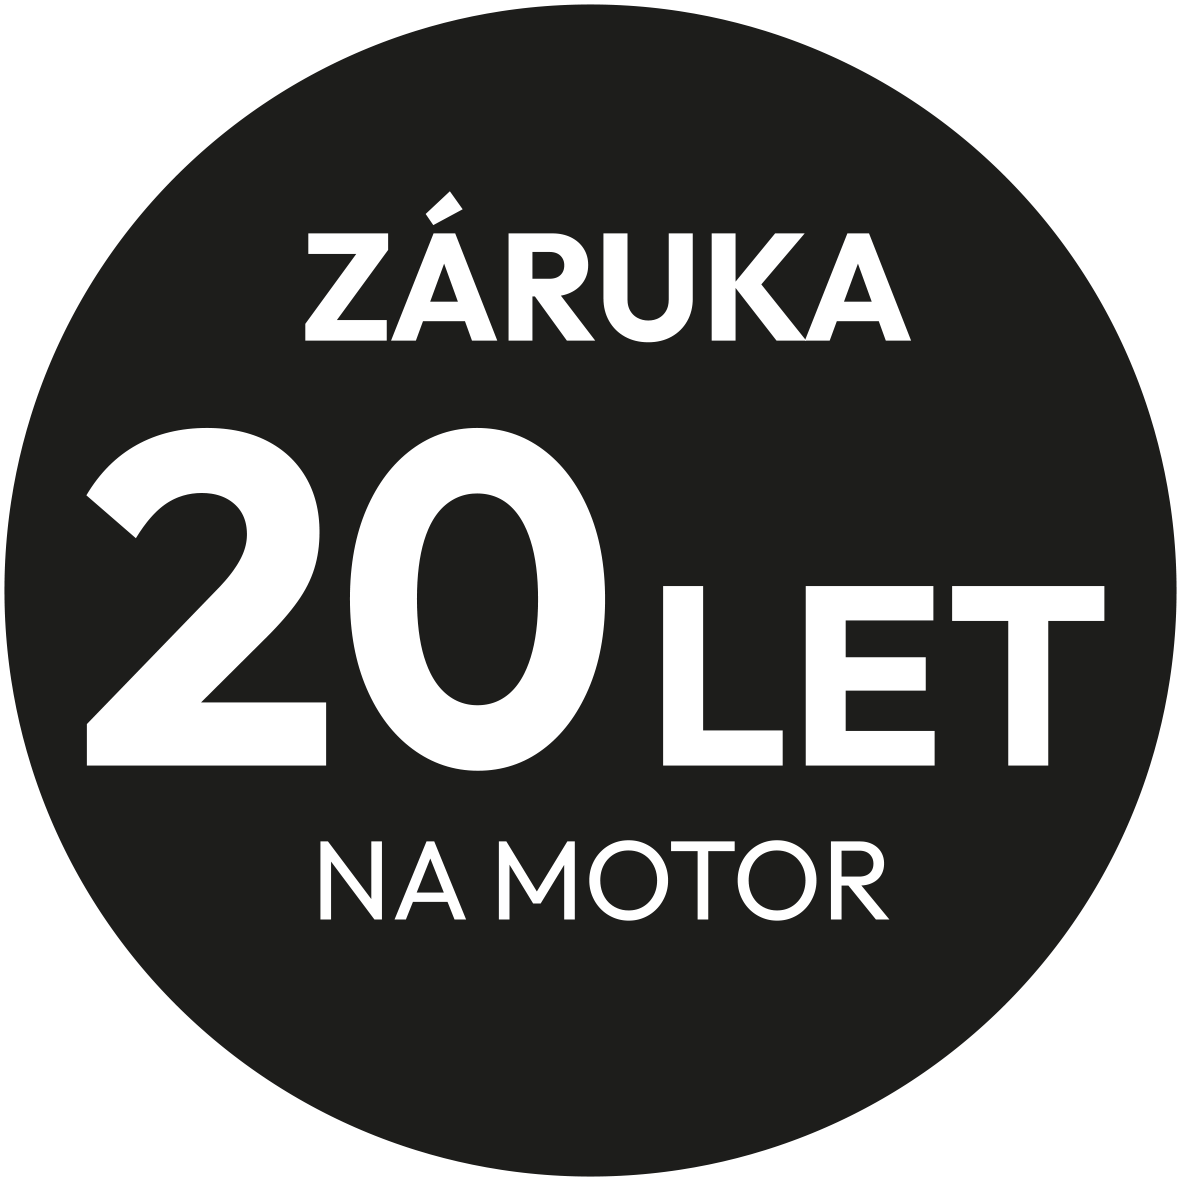 haier-zaruka-20-let-motor